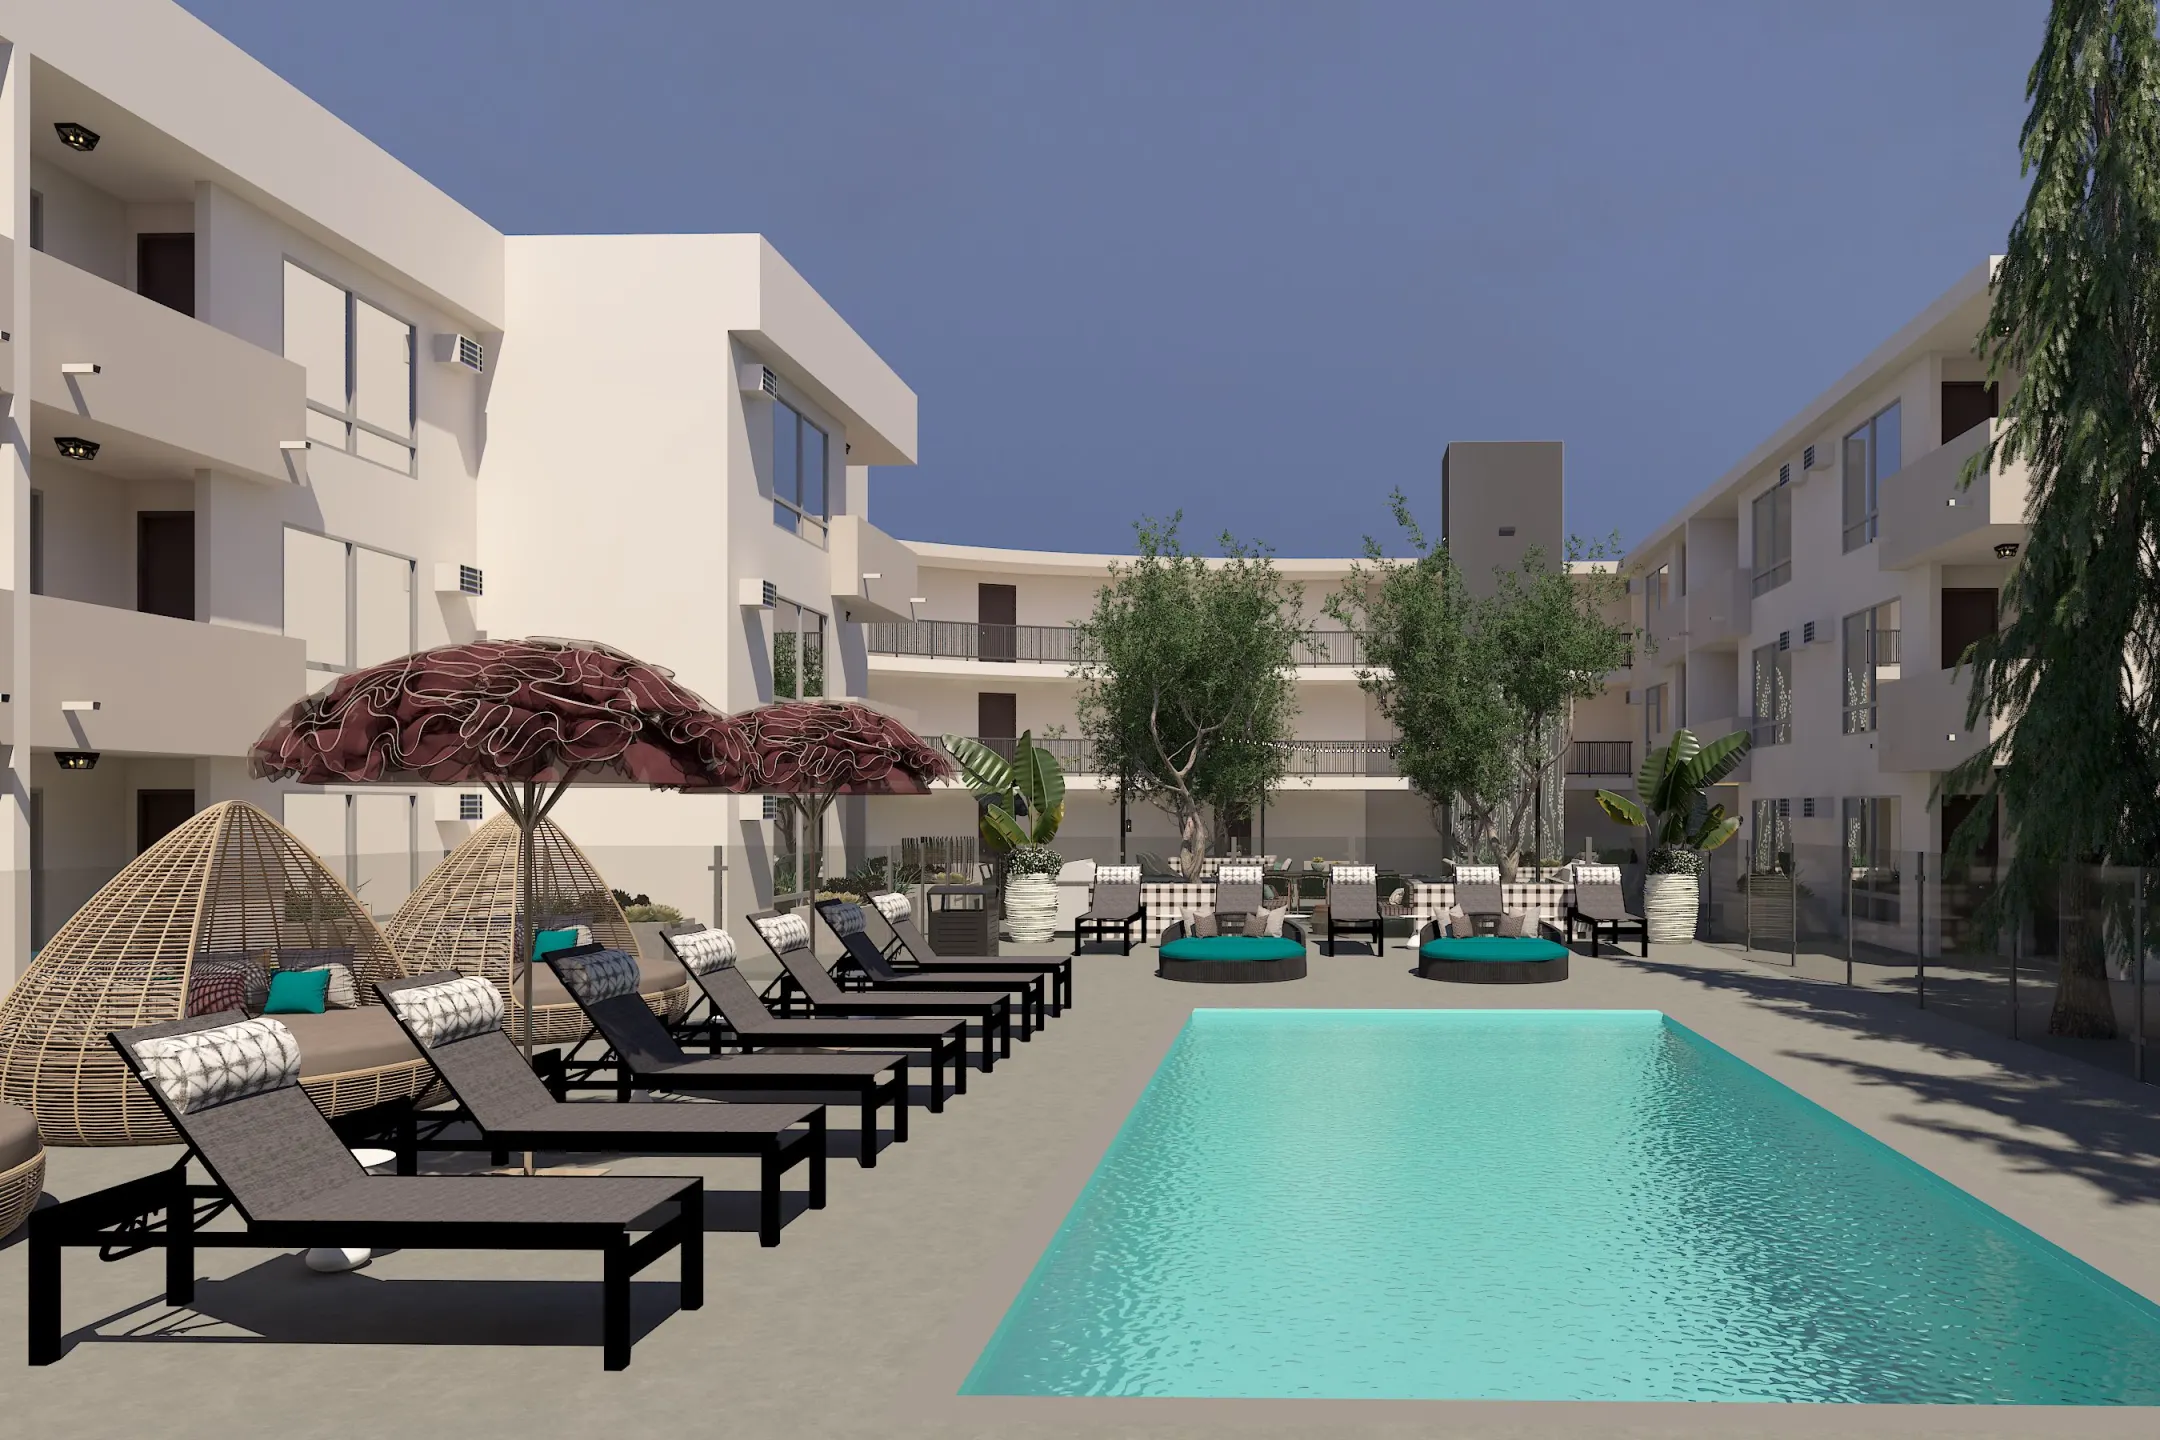 Pool - Lyric Apartments - Los Angeles, CA